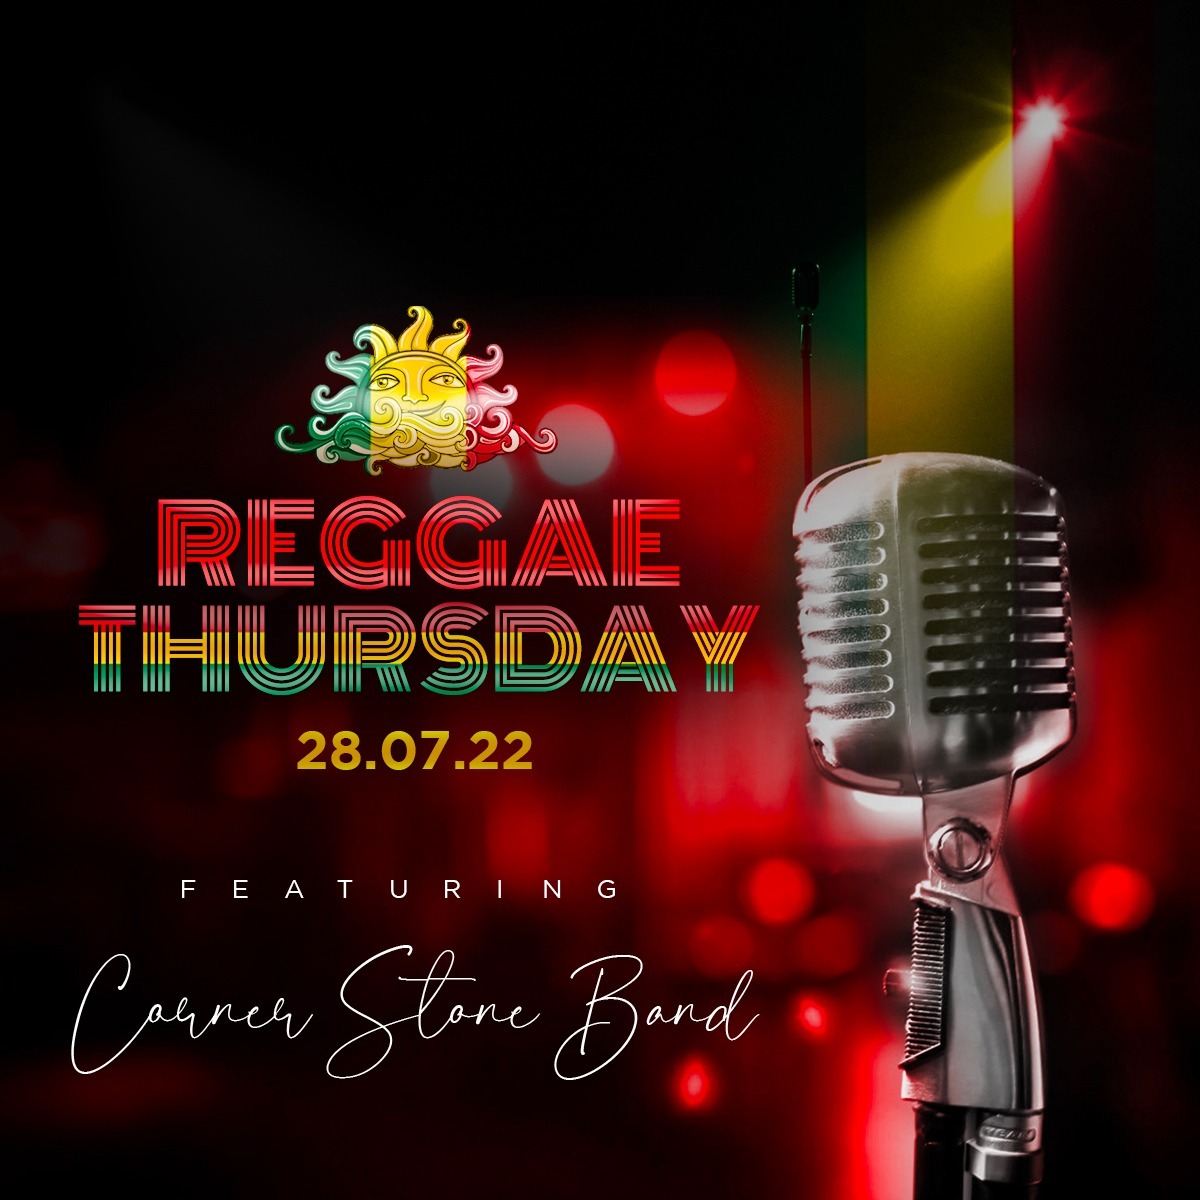 Reggae Thursday - Great fete weekend